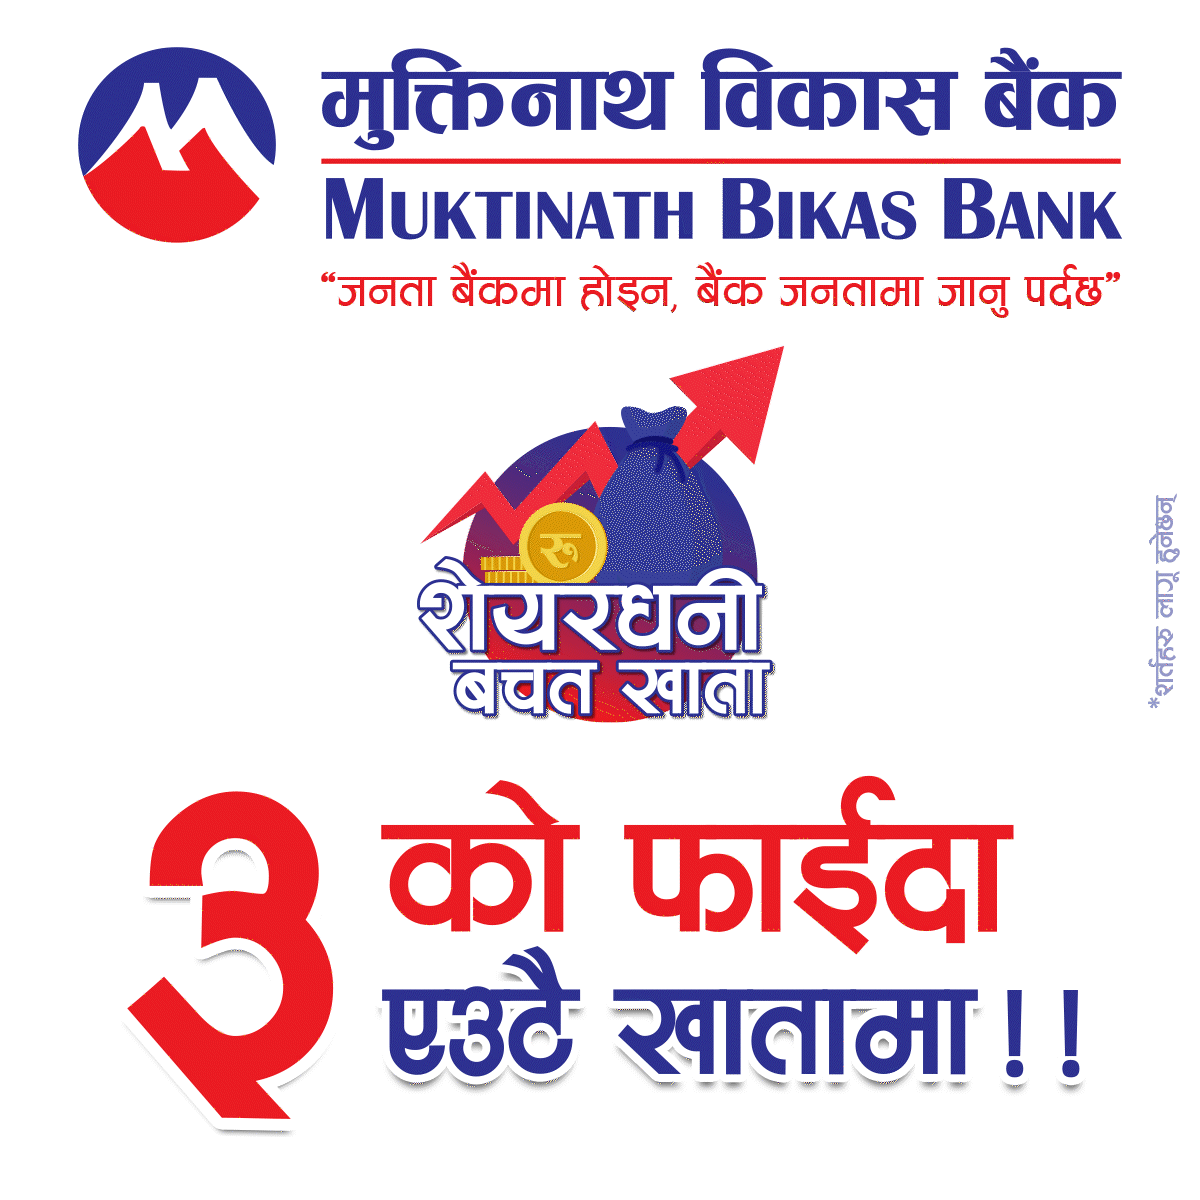 Muktinath Bikas Bank Limited